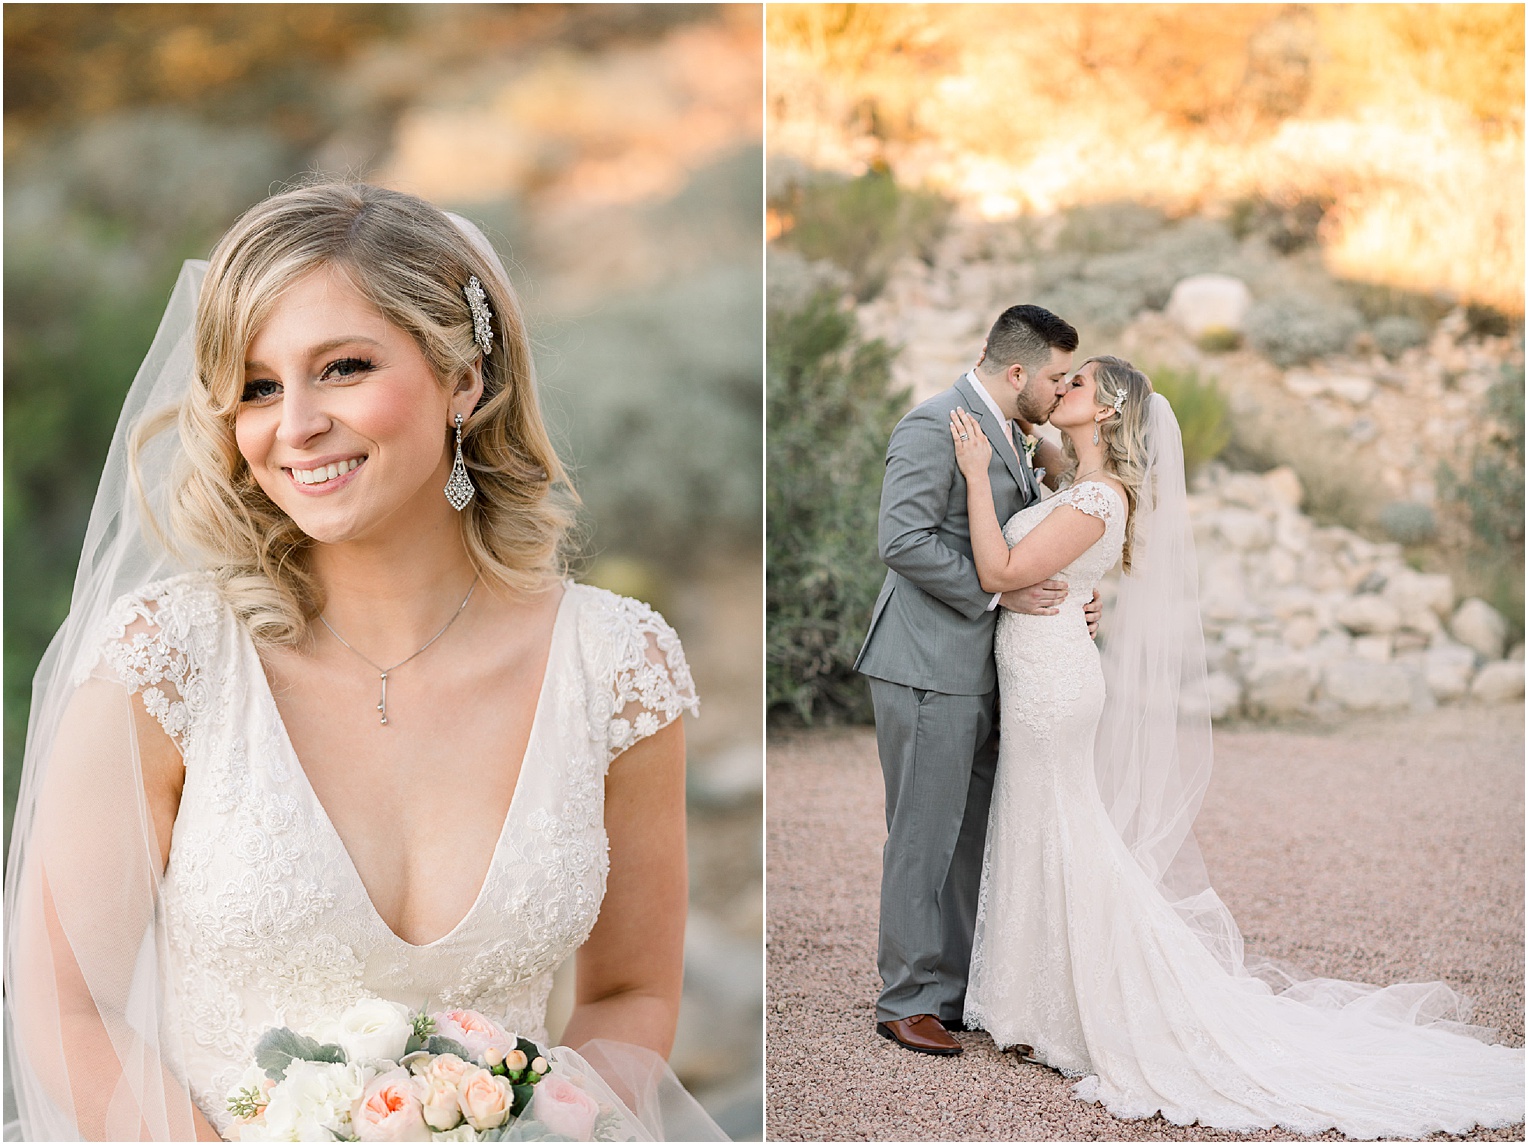 Annabelle + James Hilton El Conquistador Wedding bride and groom sunset dessert portraits